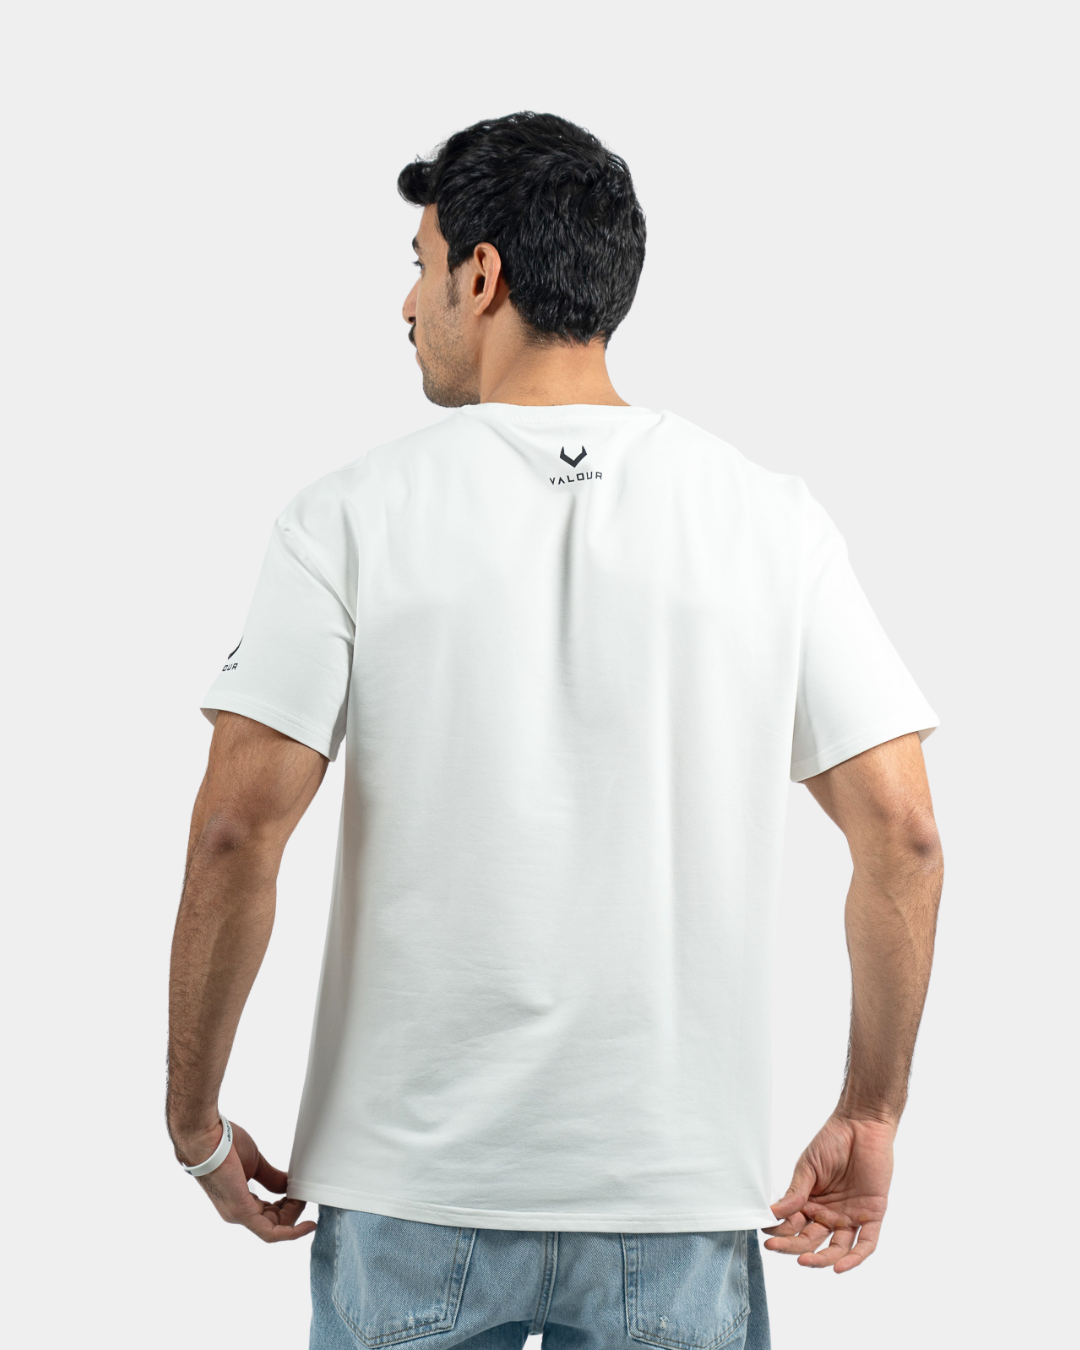 Valour Compression - Men's White Short Sleeve Top